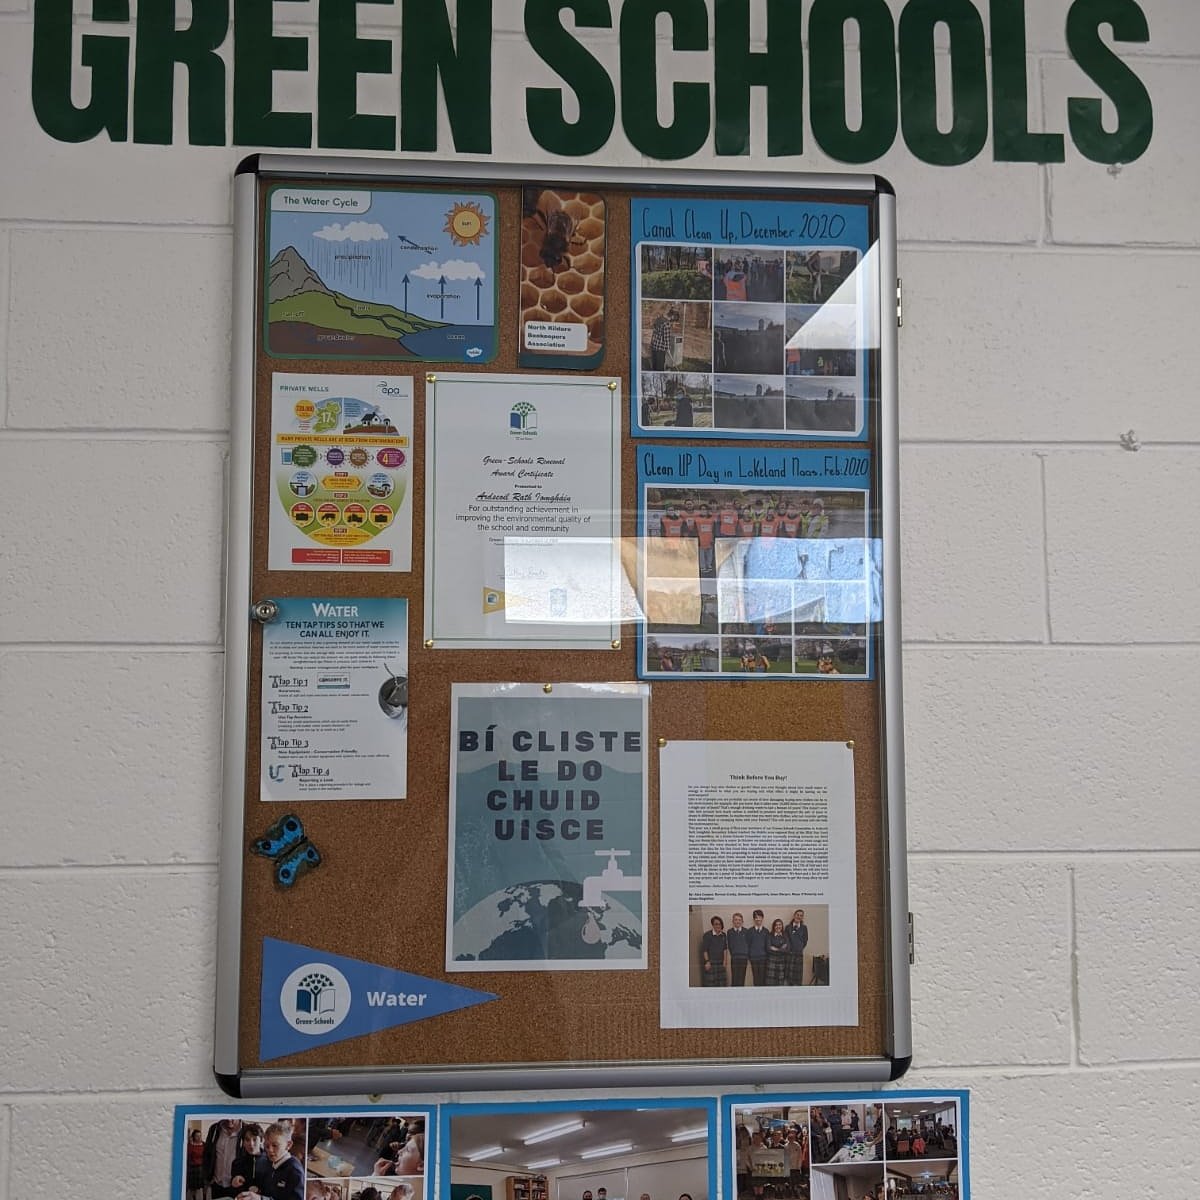 Ardscoil Rath Iomgháin on X: ♻️Our green schools notice board